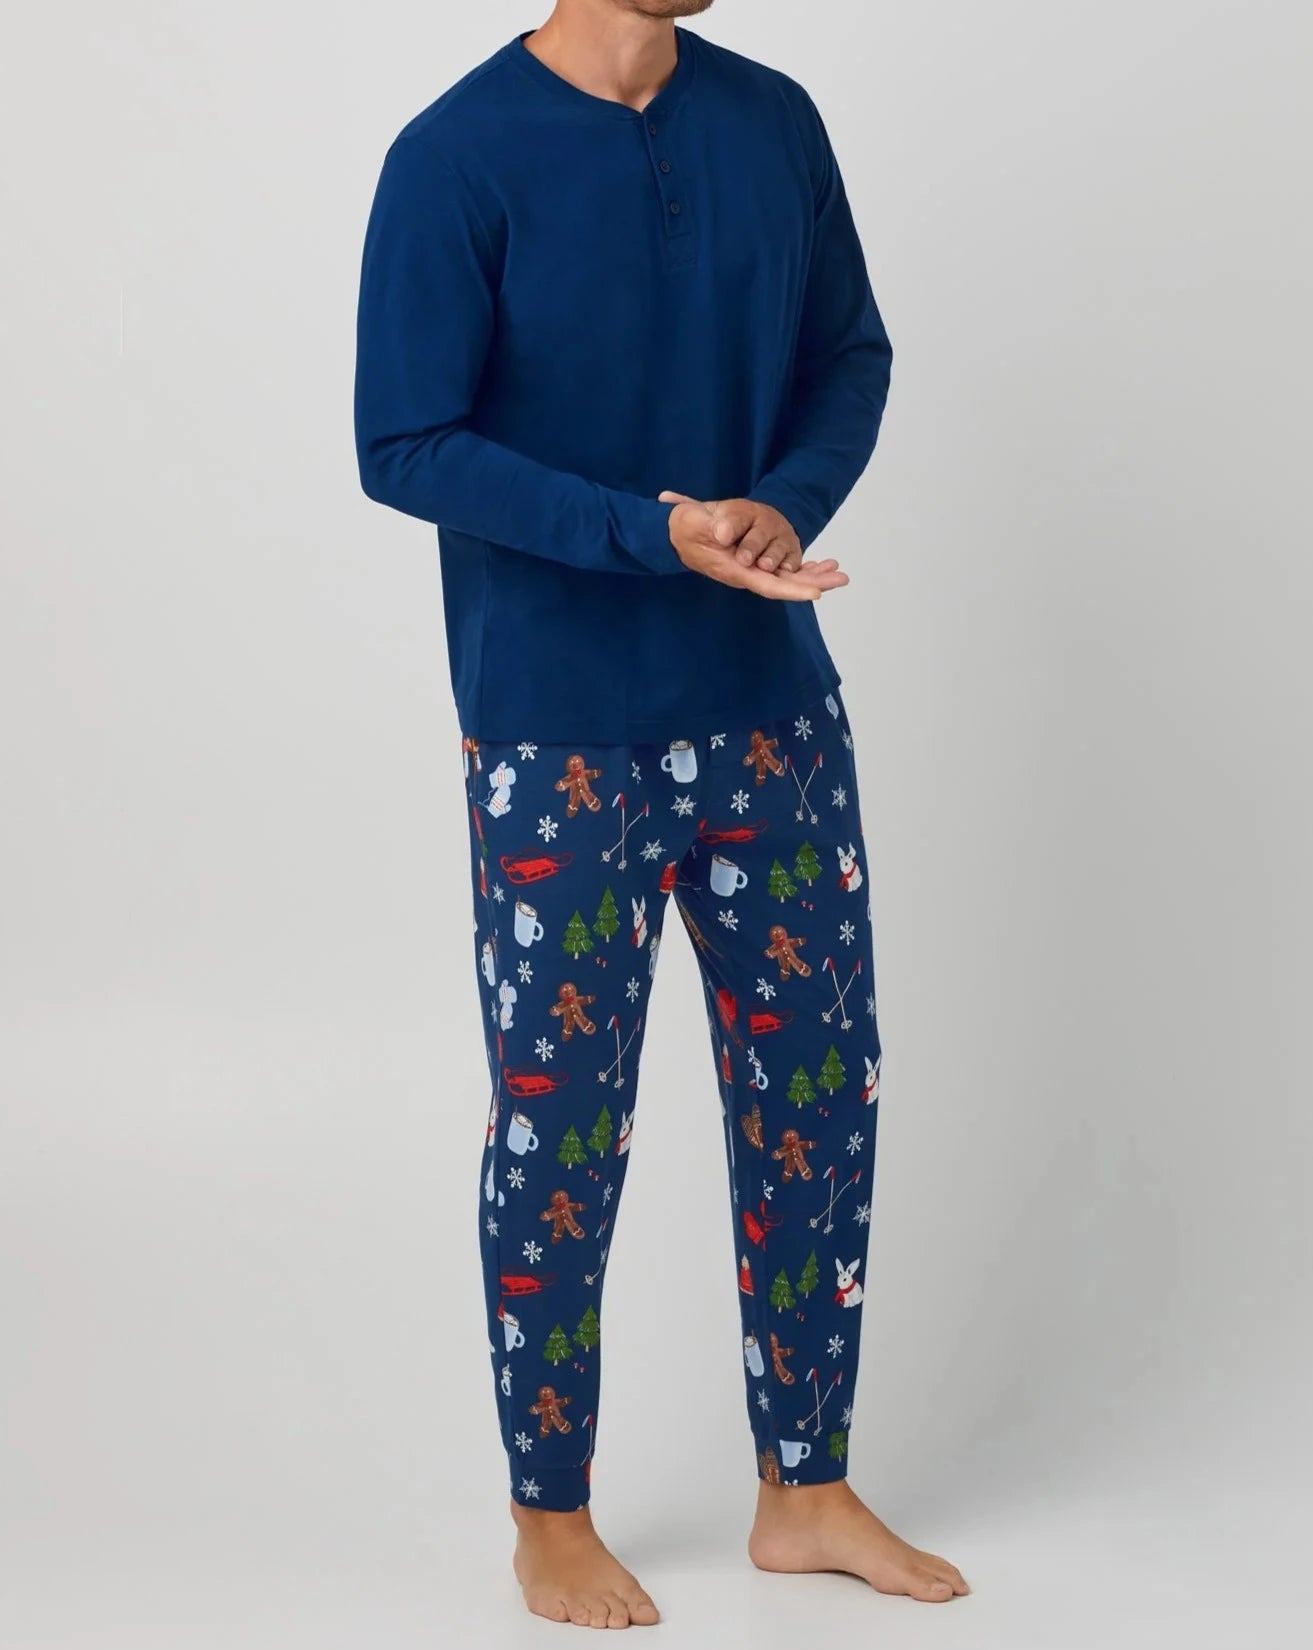 Seasonal Delights Men's Pullover & Jogger Set: Size M, XL